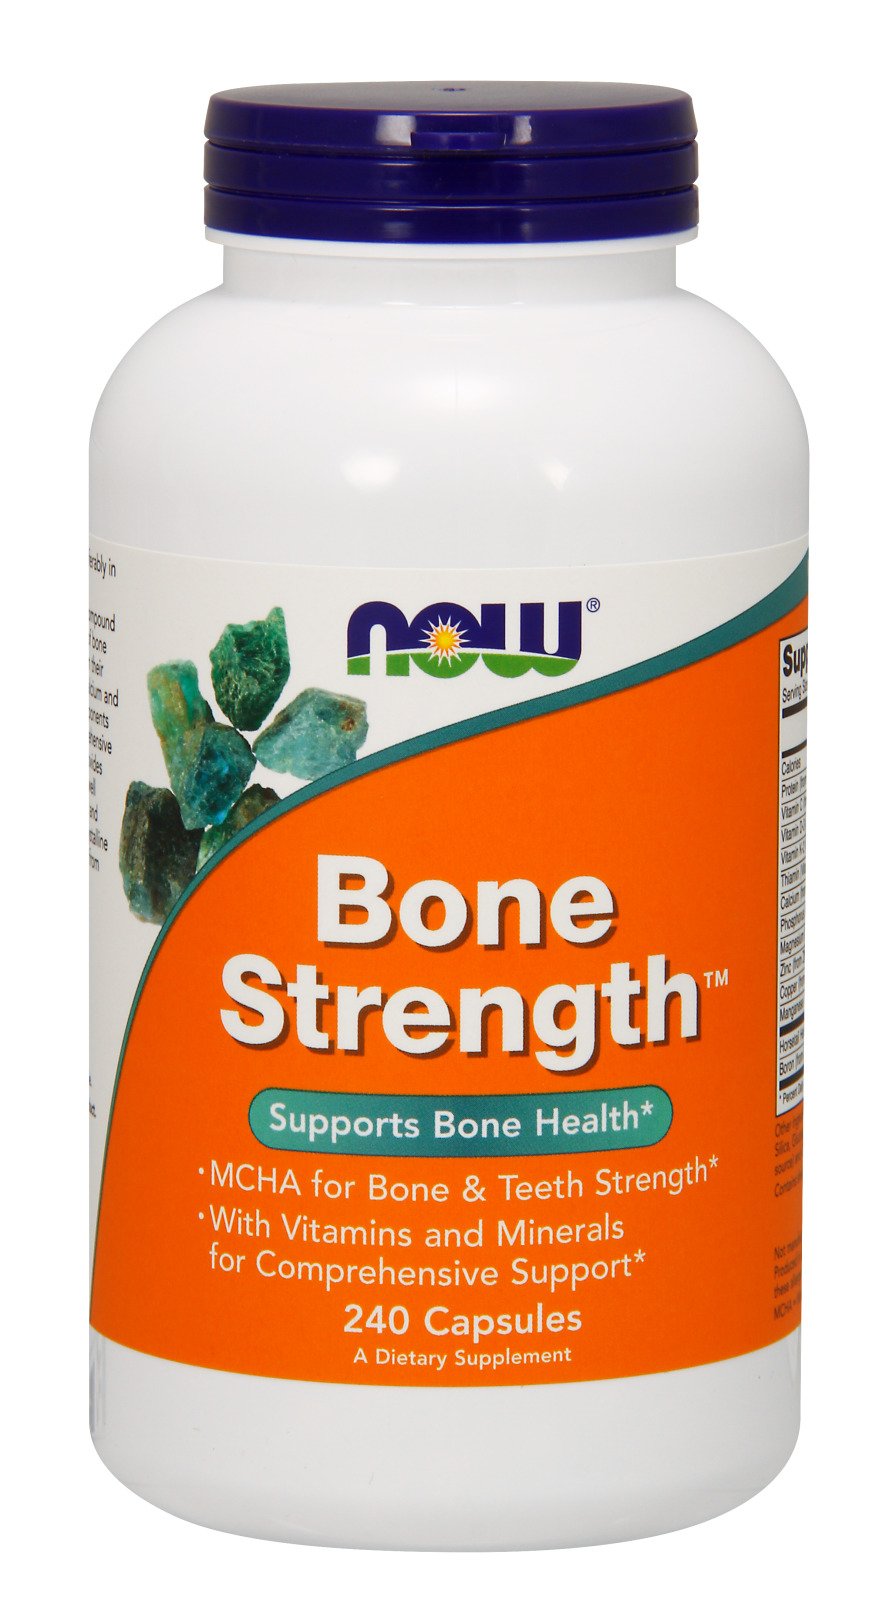 Bone Strength™ Capsules - The Daily Apple